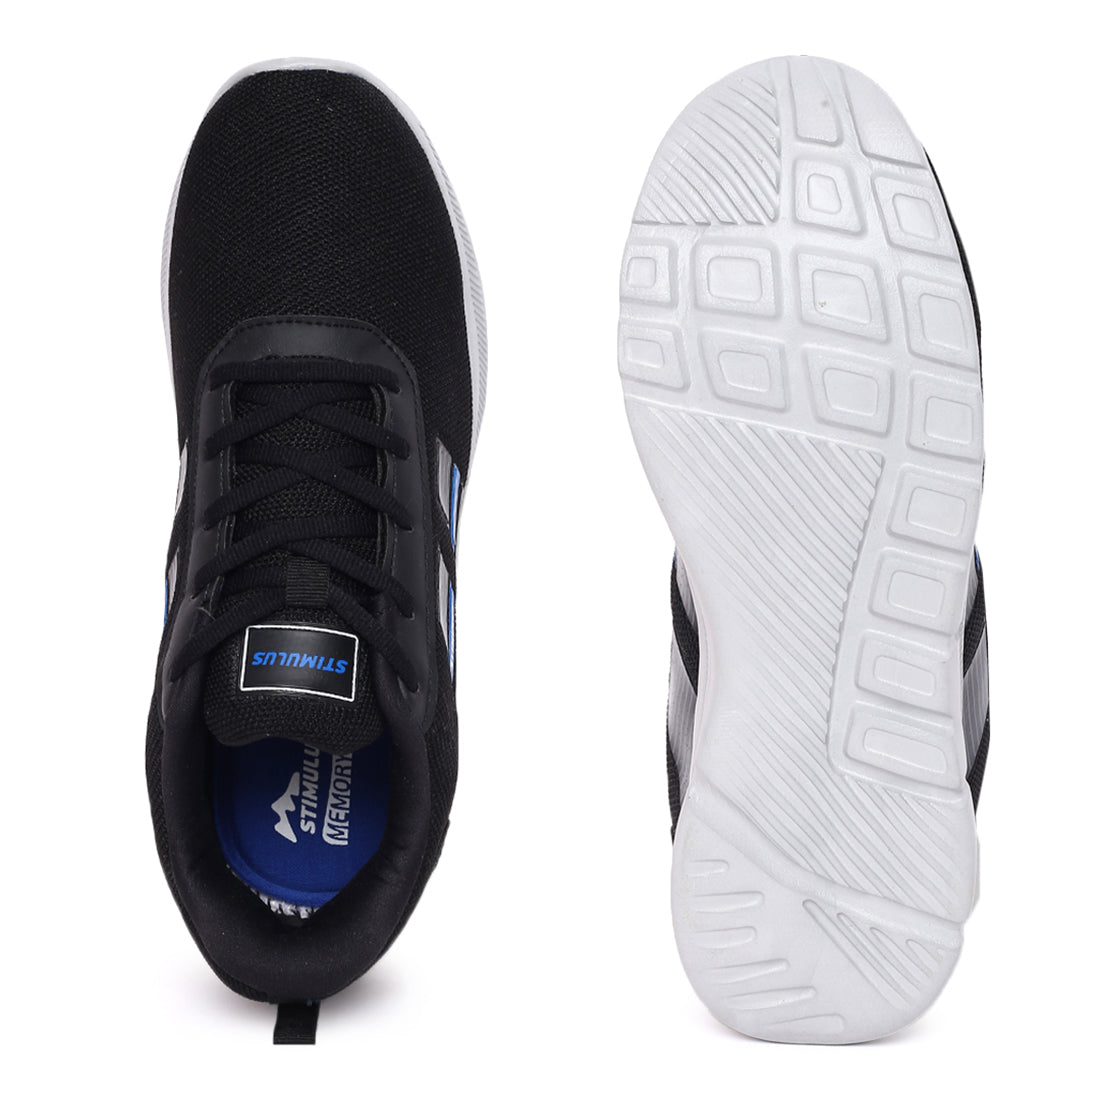 Paragon Stimulus Classic Black Running Shoes for Men